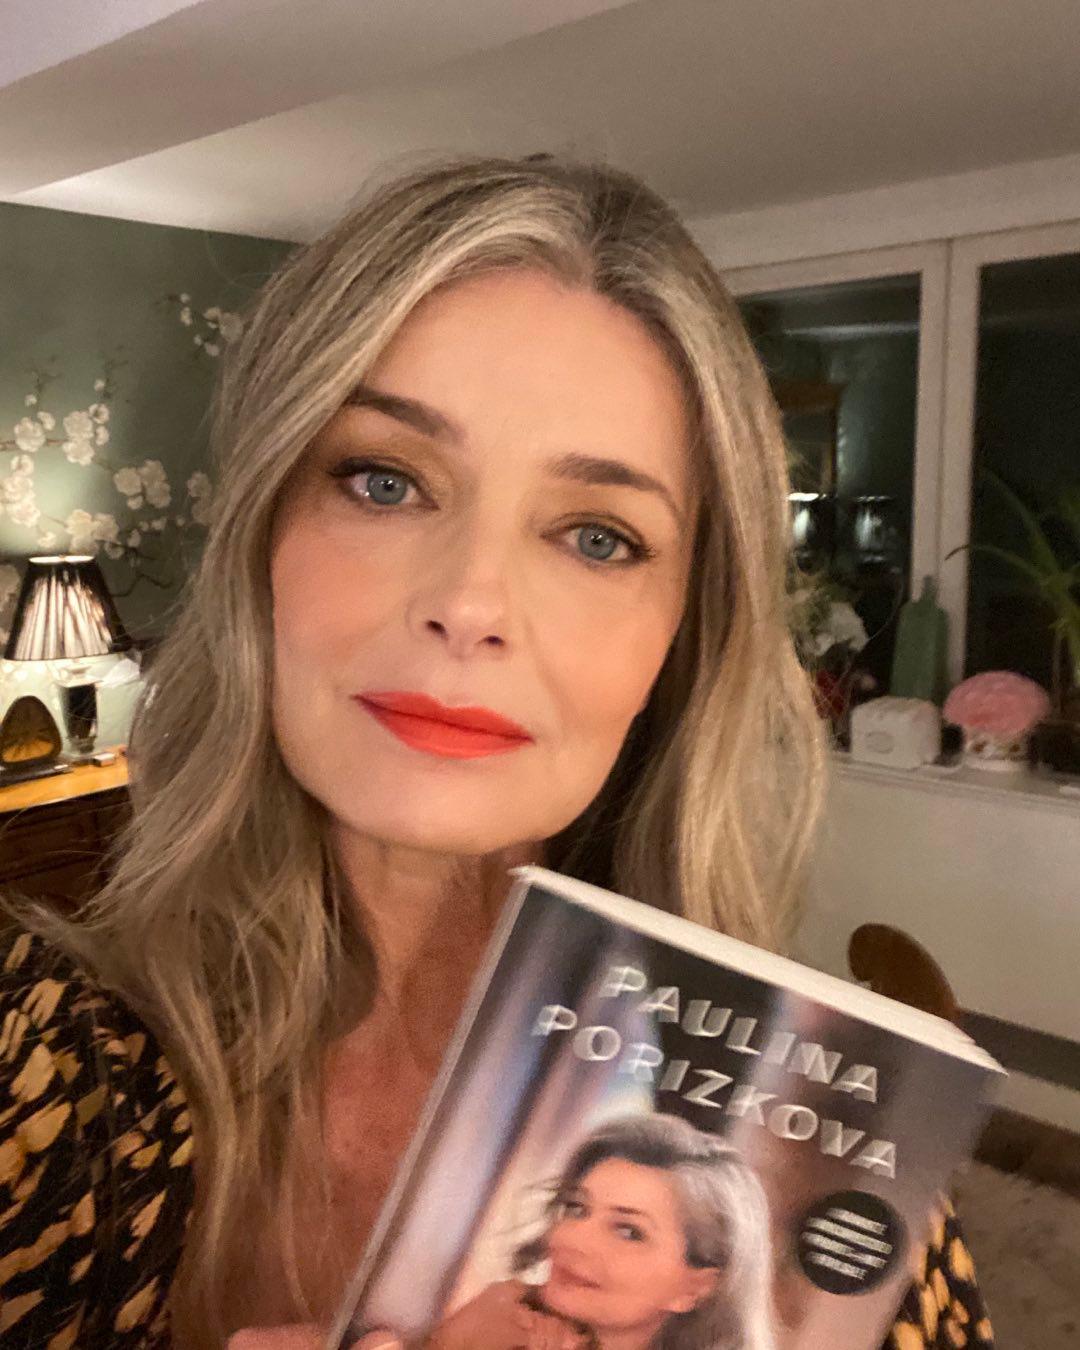 Paulina Porizkova shared a blurry make-up selfie